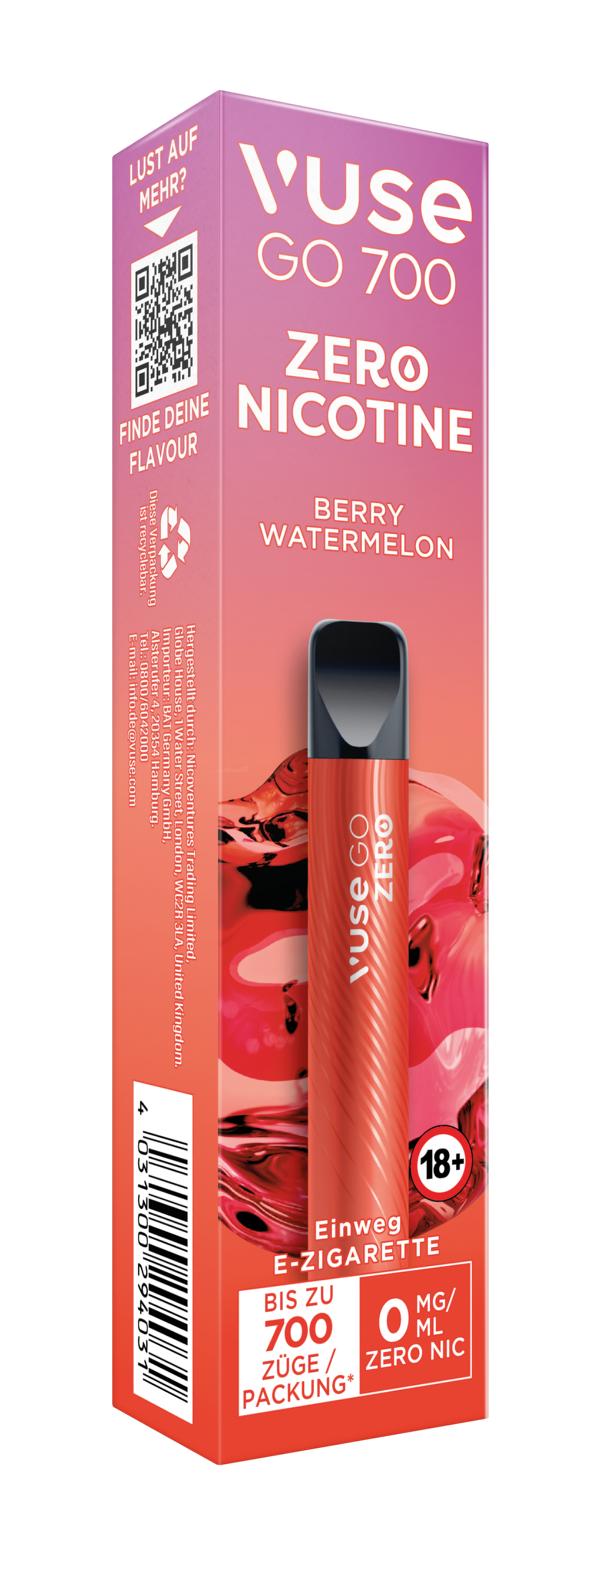 Vuse Go 700 Einweg E-Zigarette Berry Watermelon 0mg/ml Nikotin